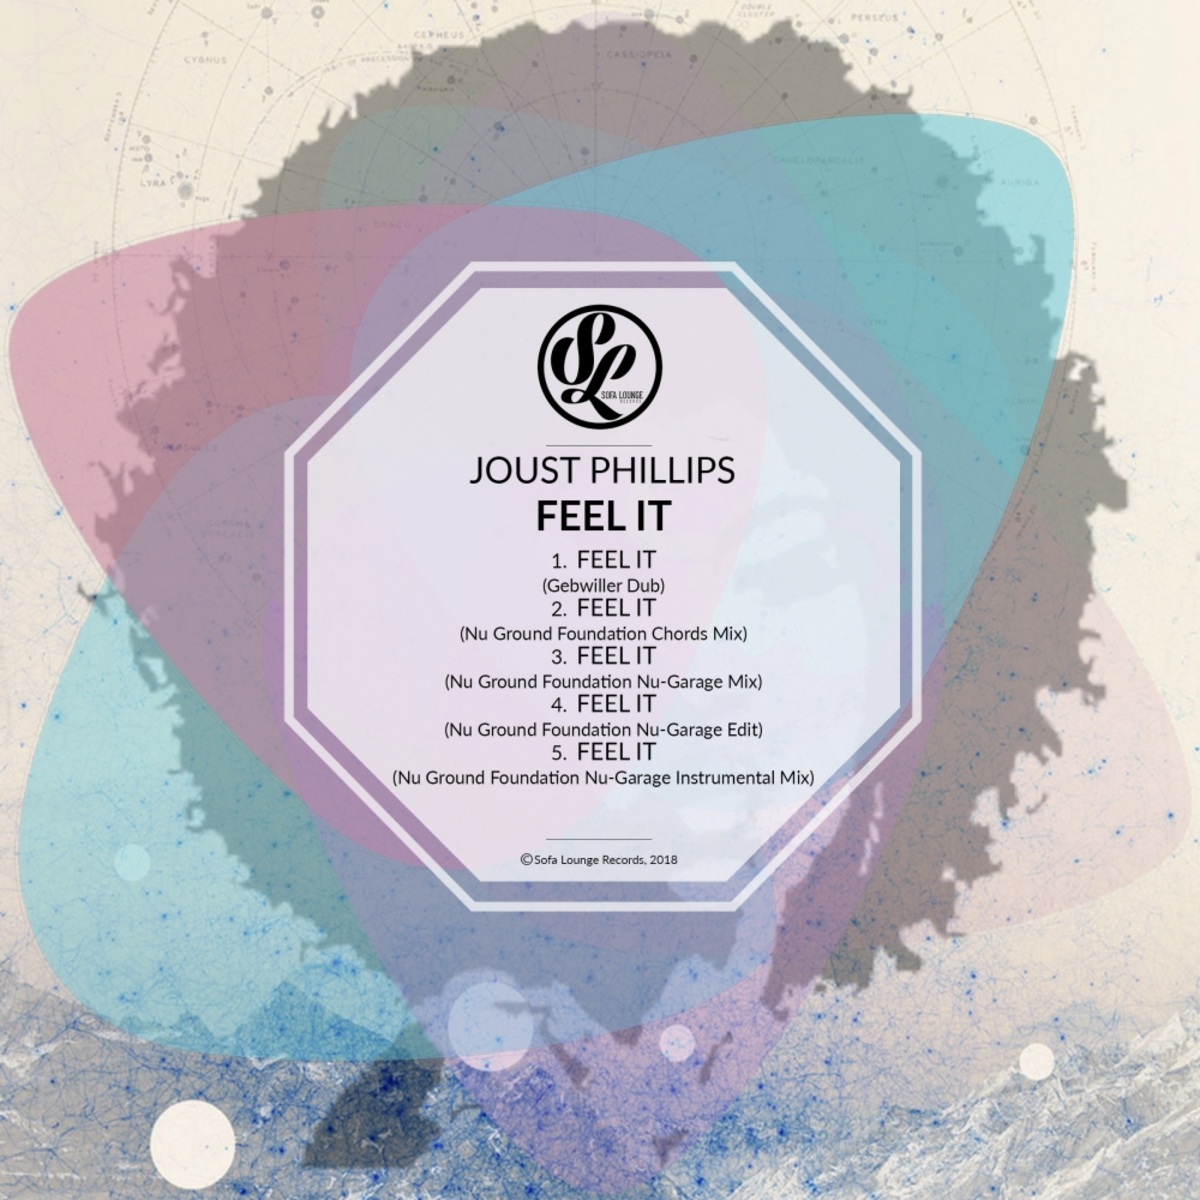 Joust Phillips - Feel It / Sofa Lounge Records